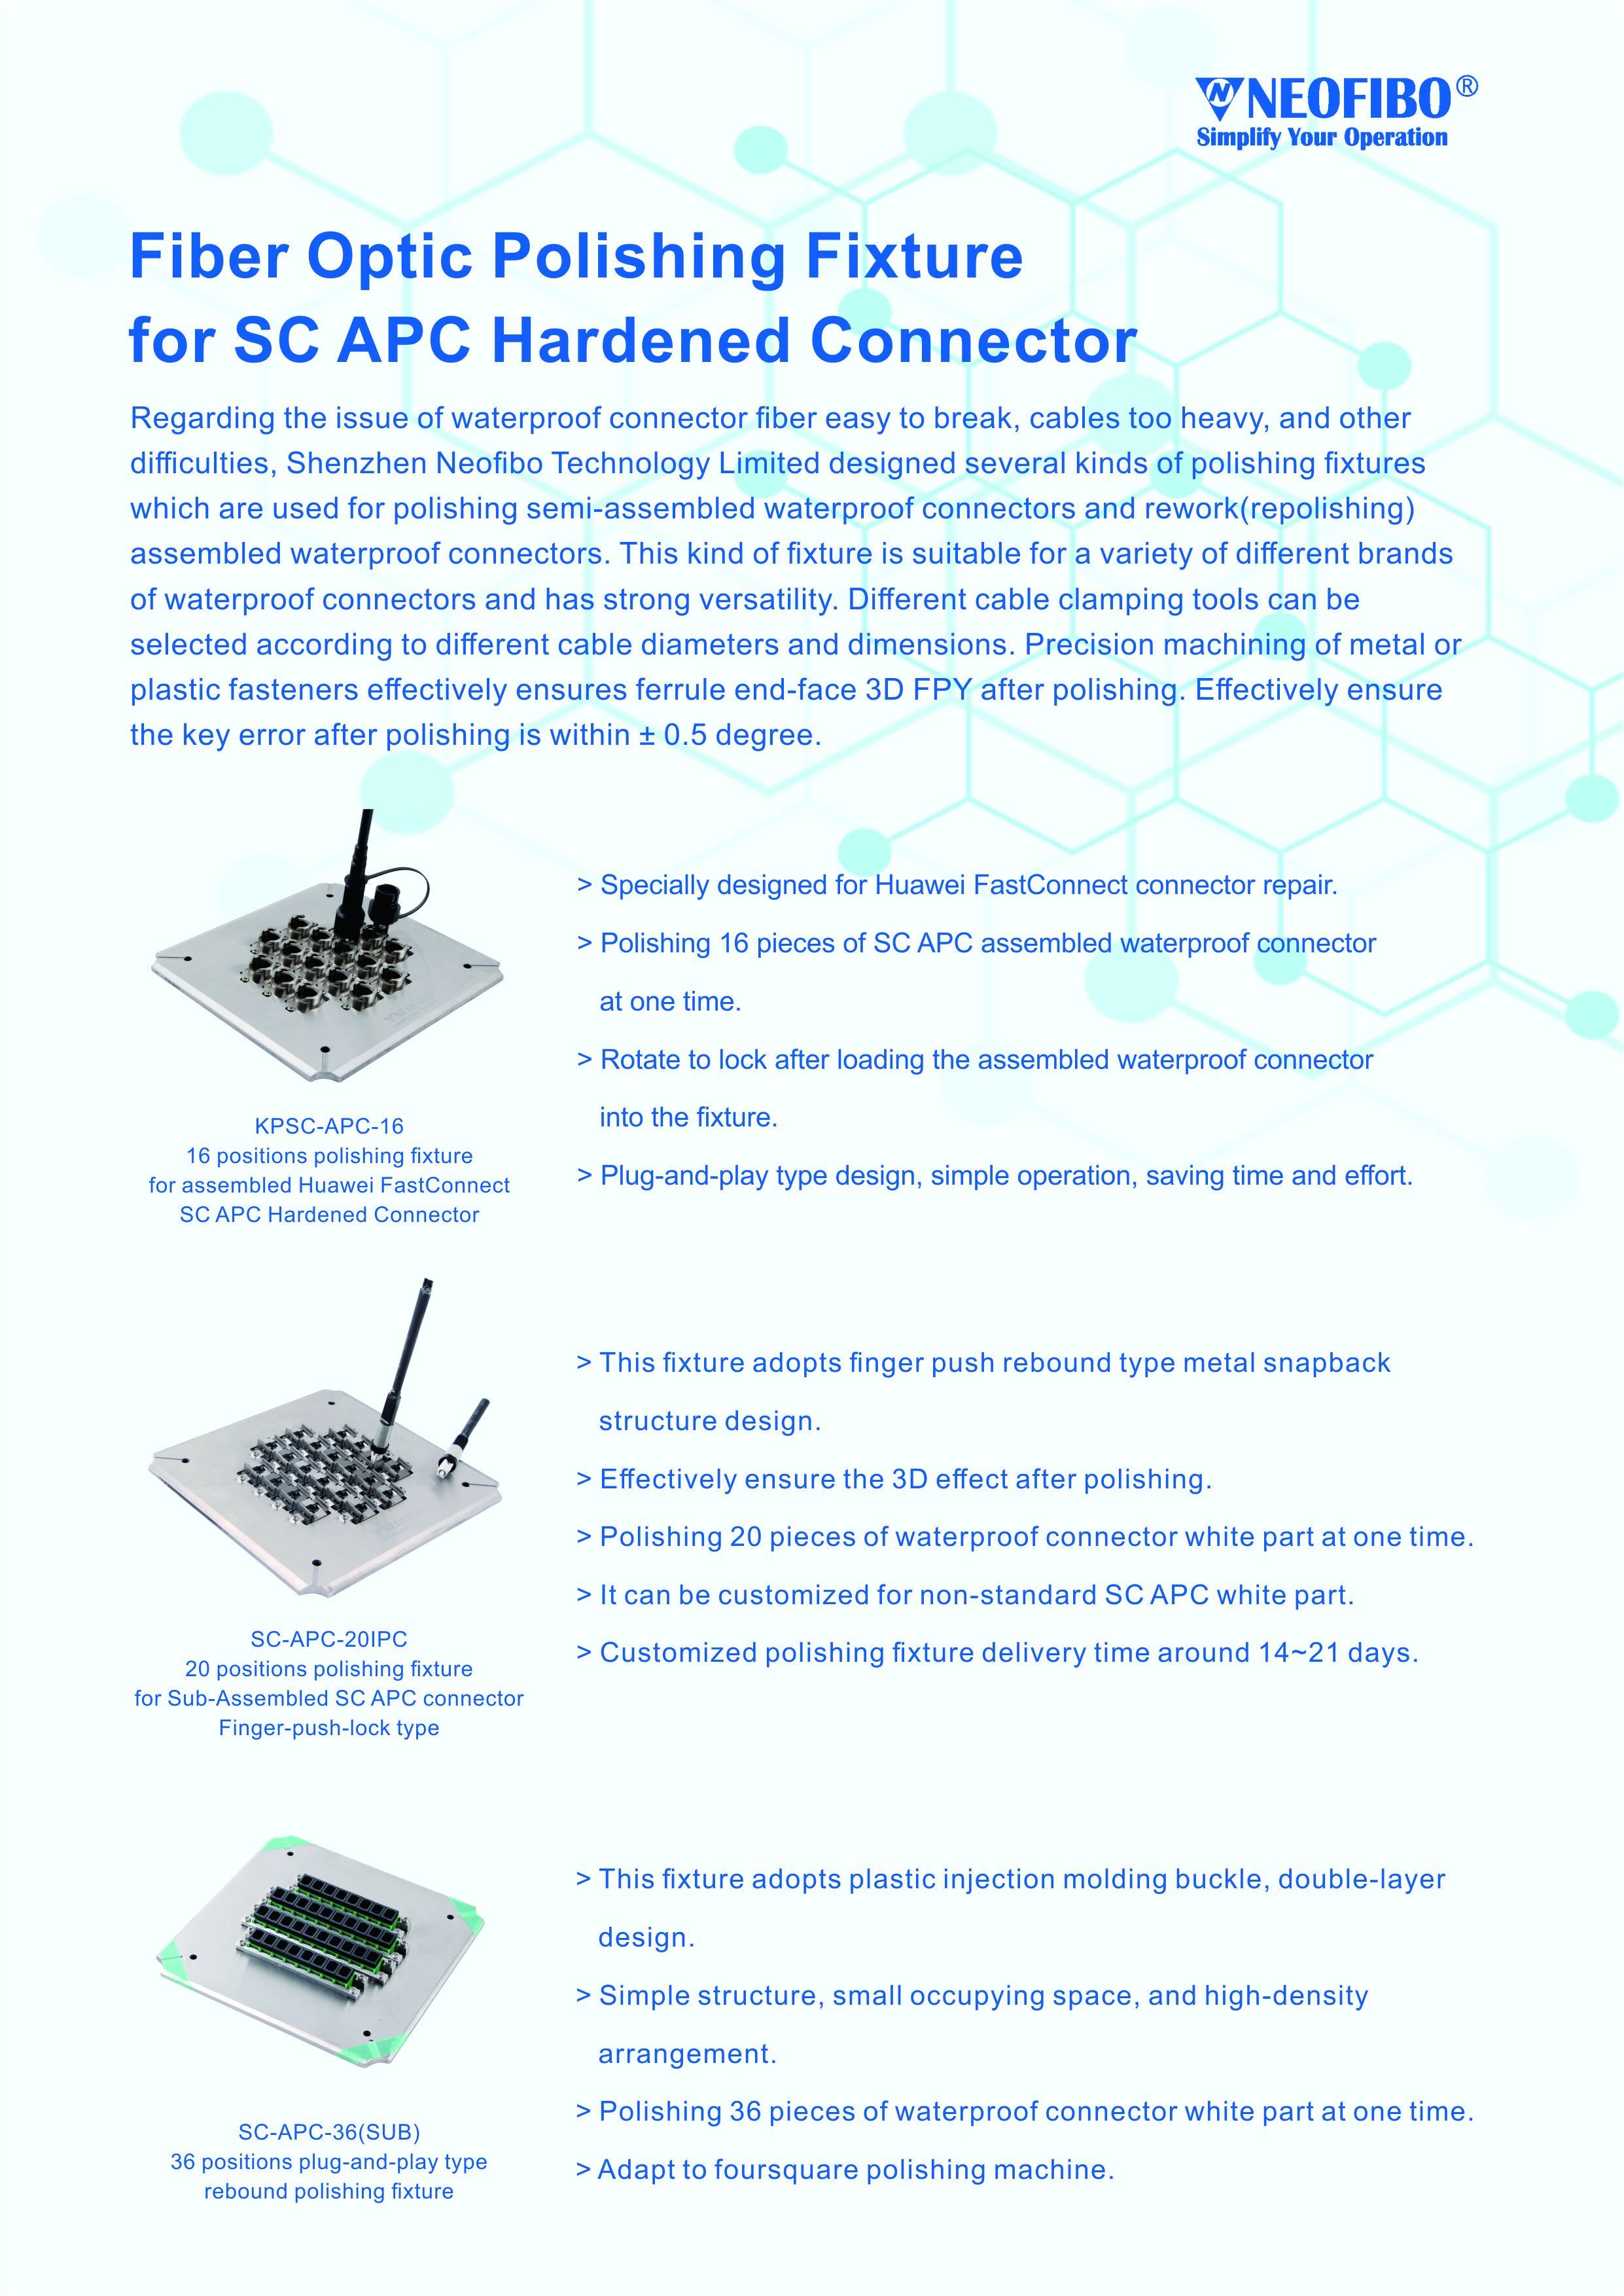 Fiber Optic Polishing Fixture for SC APC Hardened Connector